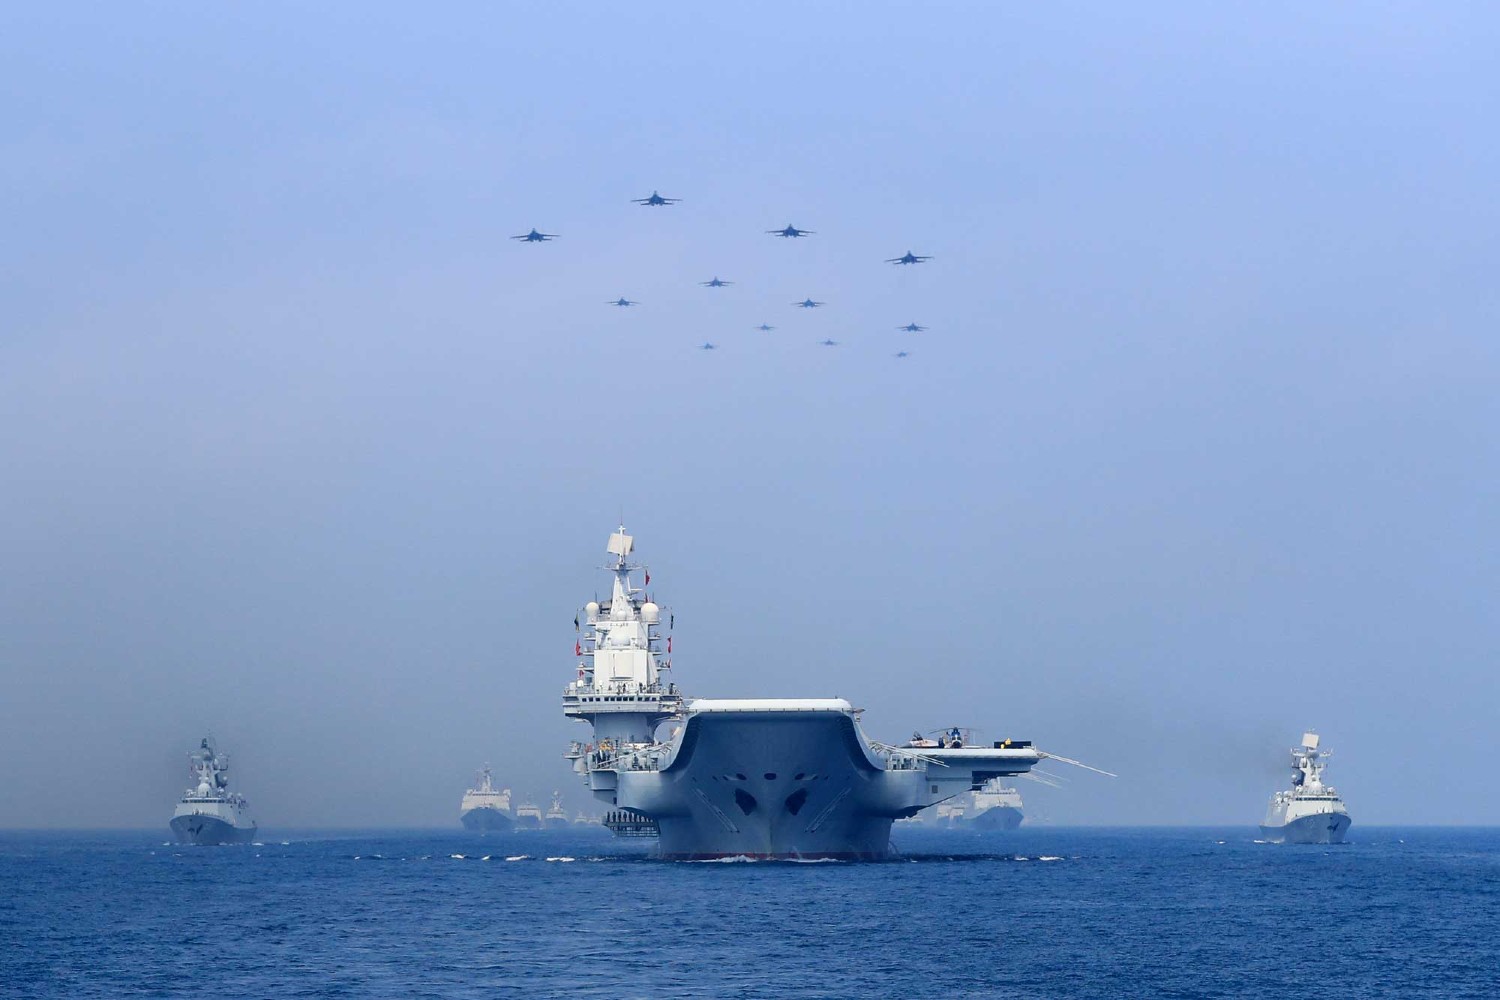 Prvi kineski nosač aviona, Ljaoning, u pratnji ratnih brodova i borbenih aviona tokom pomorske vojne vežbe u Južnom kineskom moru, april 2018. (Foto: Reuters/Stringer)